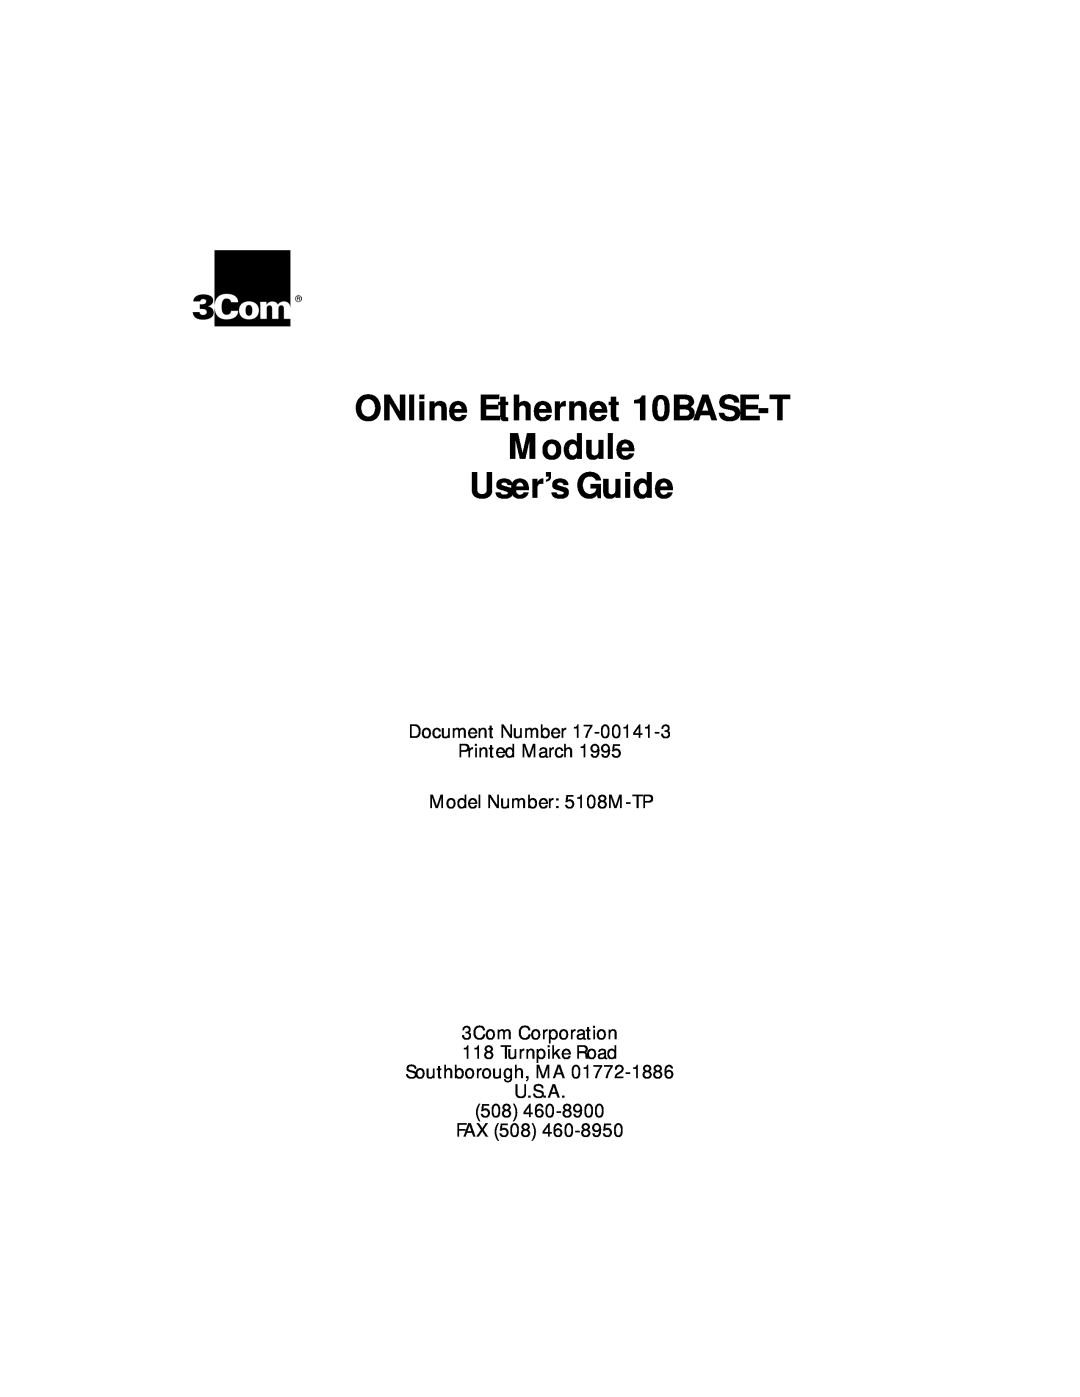 3Com 5108M-TP manual ONline Ethernet 10BASE-T Module User’s Guide, Turnpike Road Southborough, MA U.S.A 508 FAX 508 